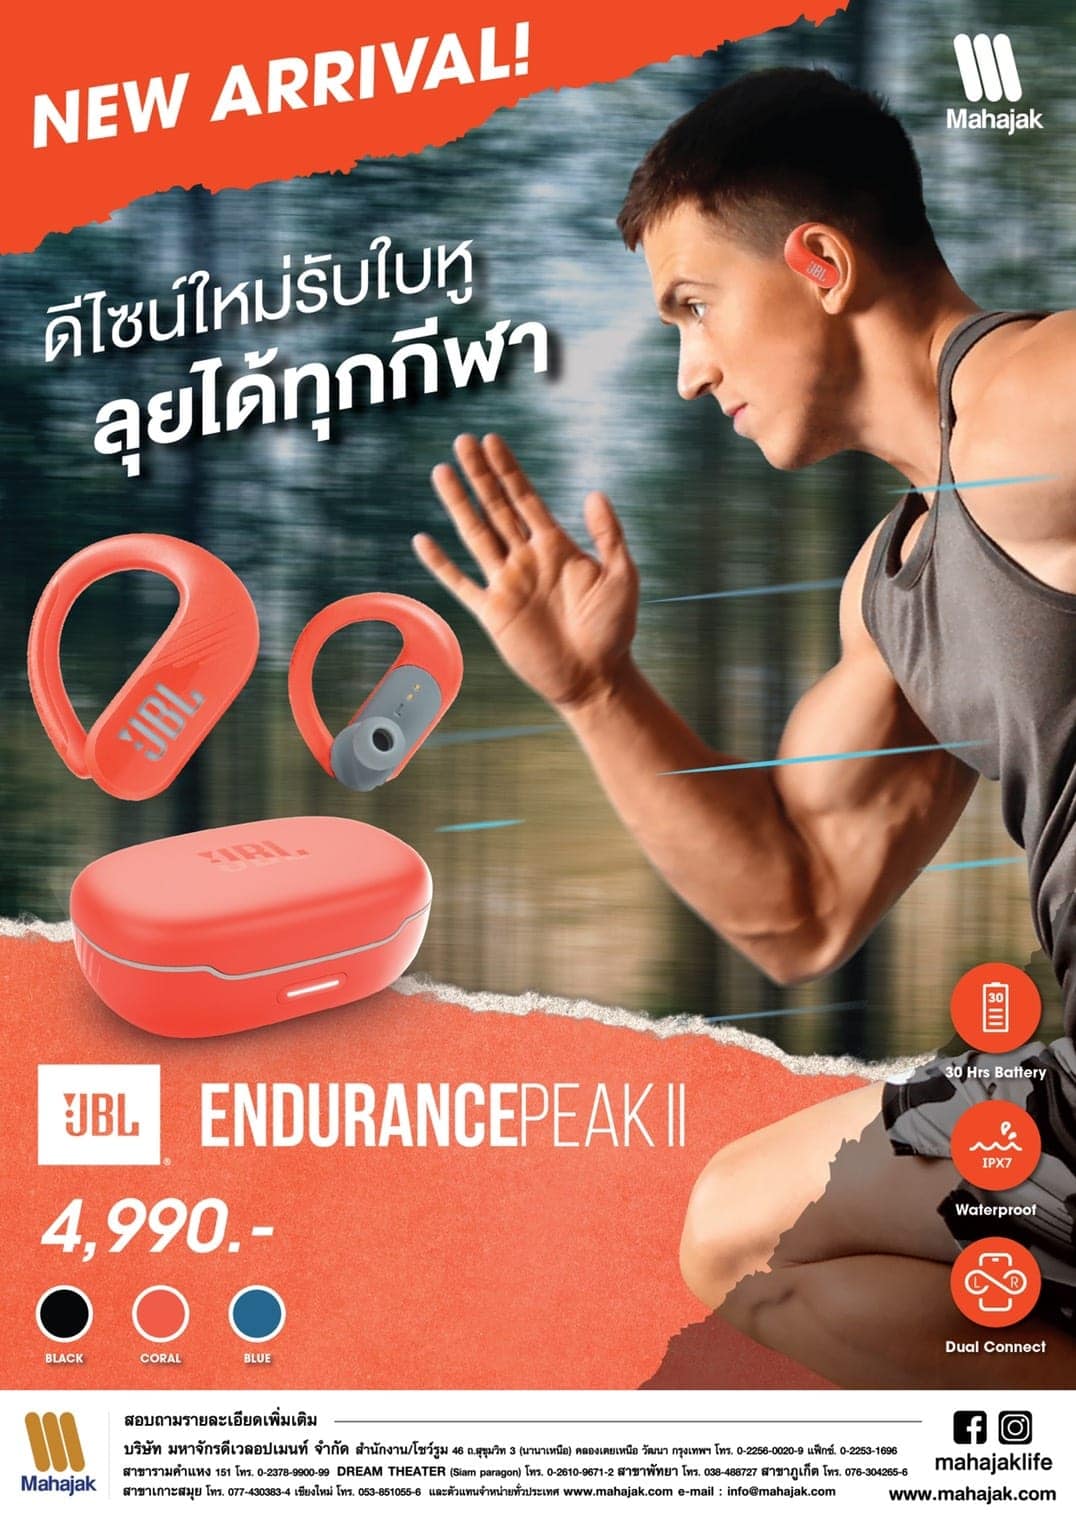 JBL ENDURANCE PEAK II หูฟังออกกำลังกายแบบ True Wireless ดีไซน์ใหม่รับกับใบหู ลุยได้ทุกกีฬา 3